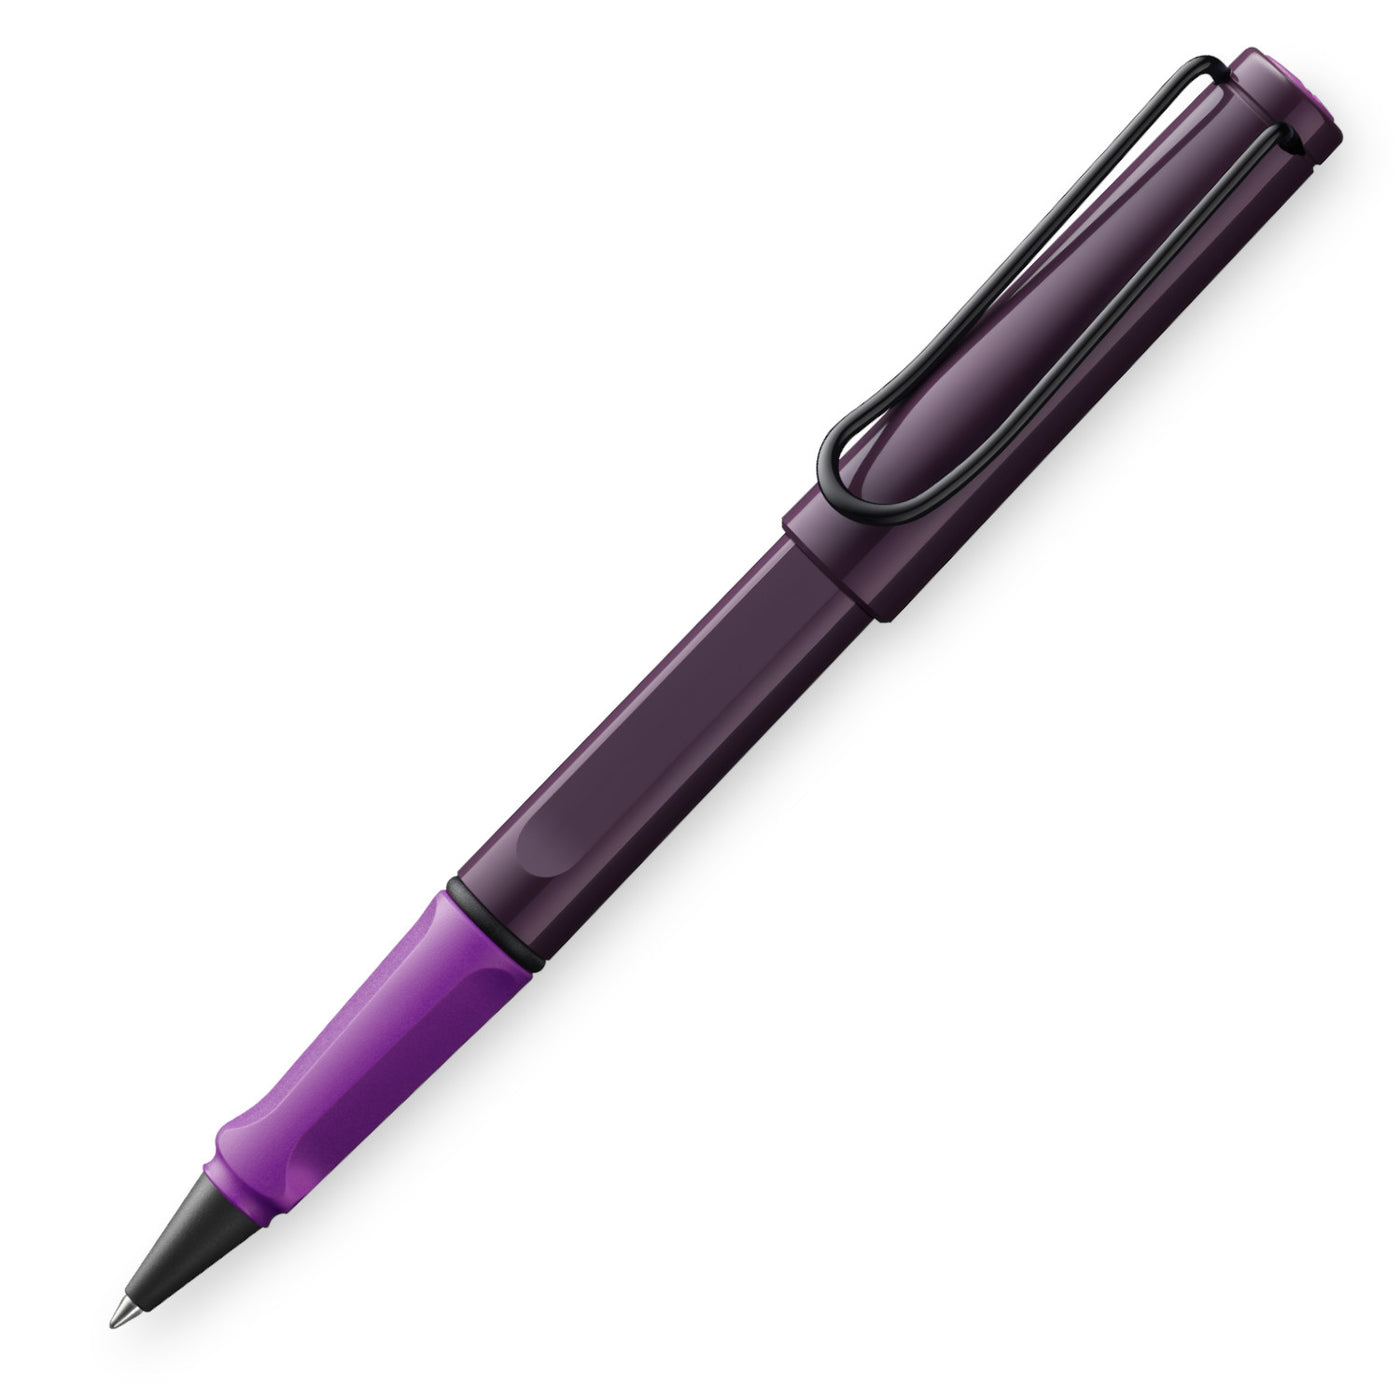 Lamy Safari Rollerball Pen - Violet Blackberry (Special Edition)